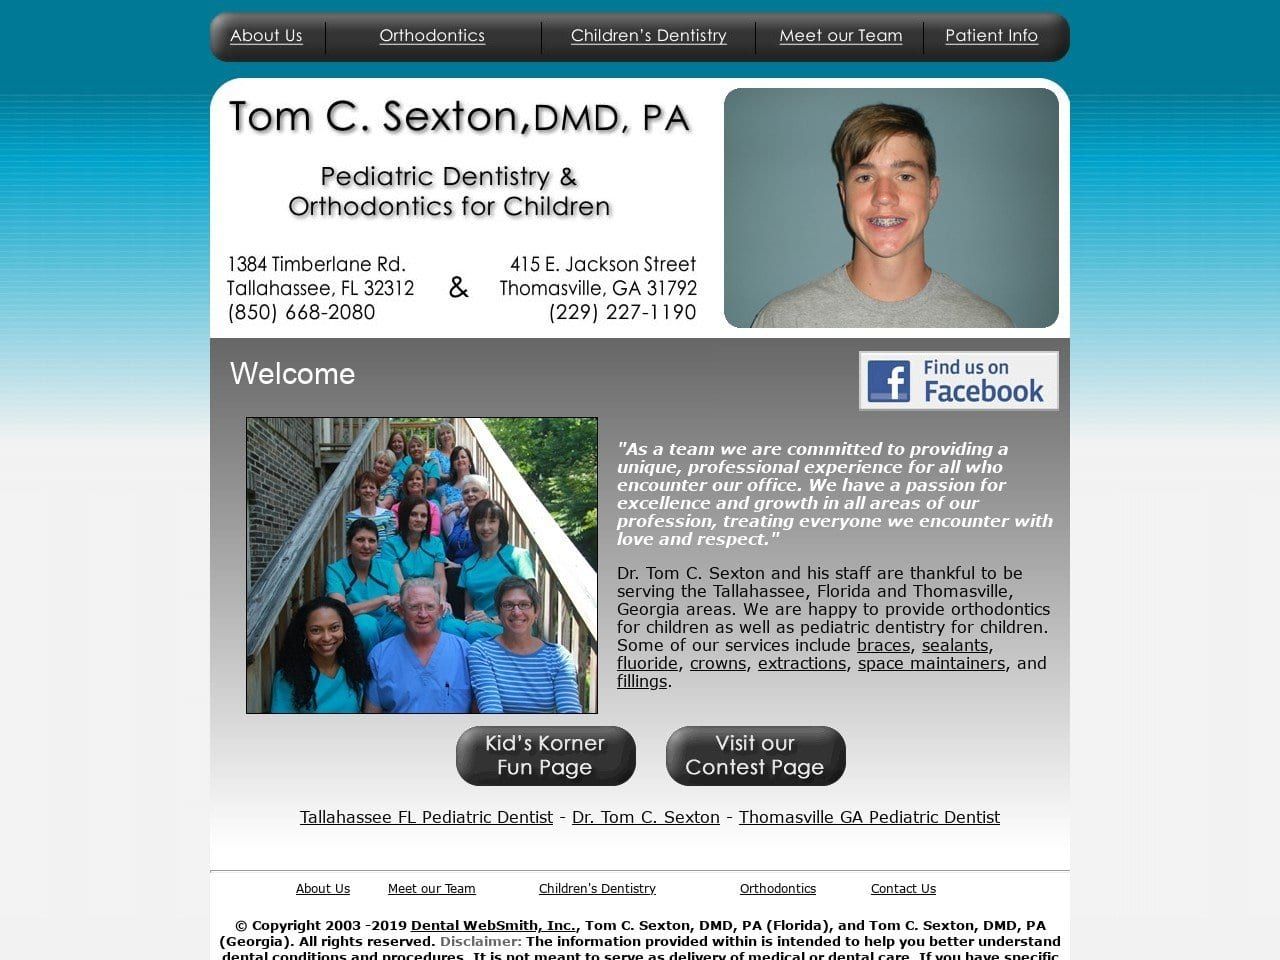 Tom C. Sexton DMD Website Screenshot from kidbraces.com